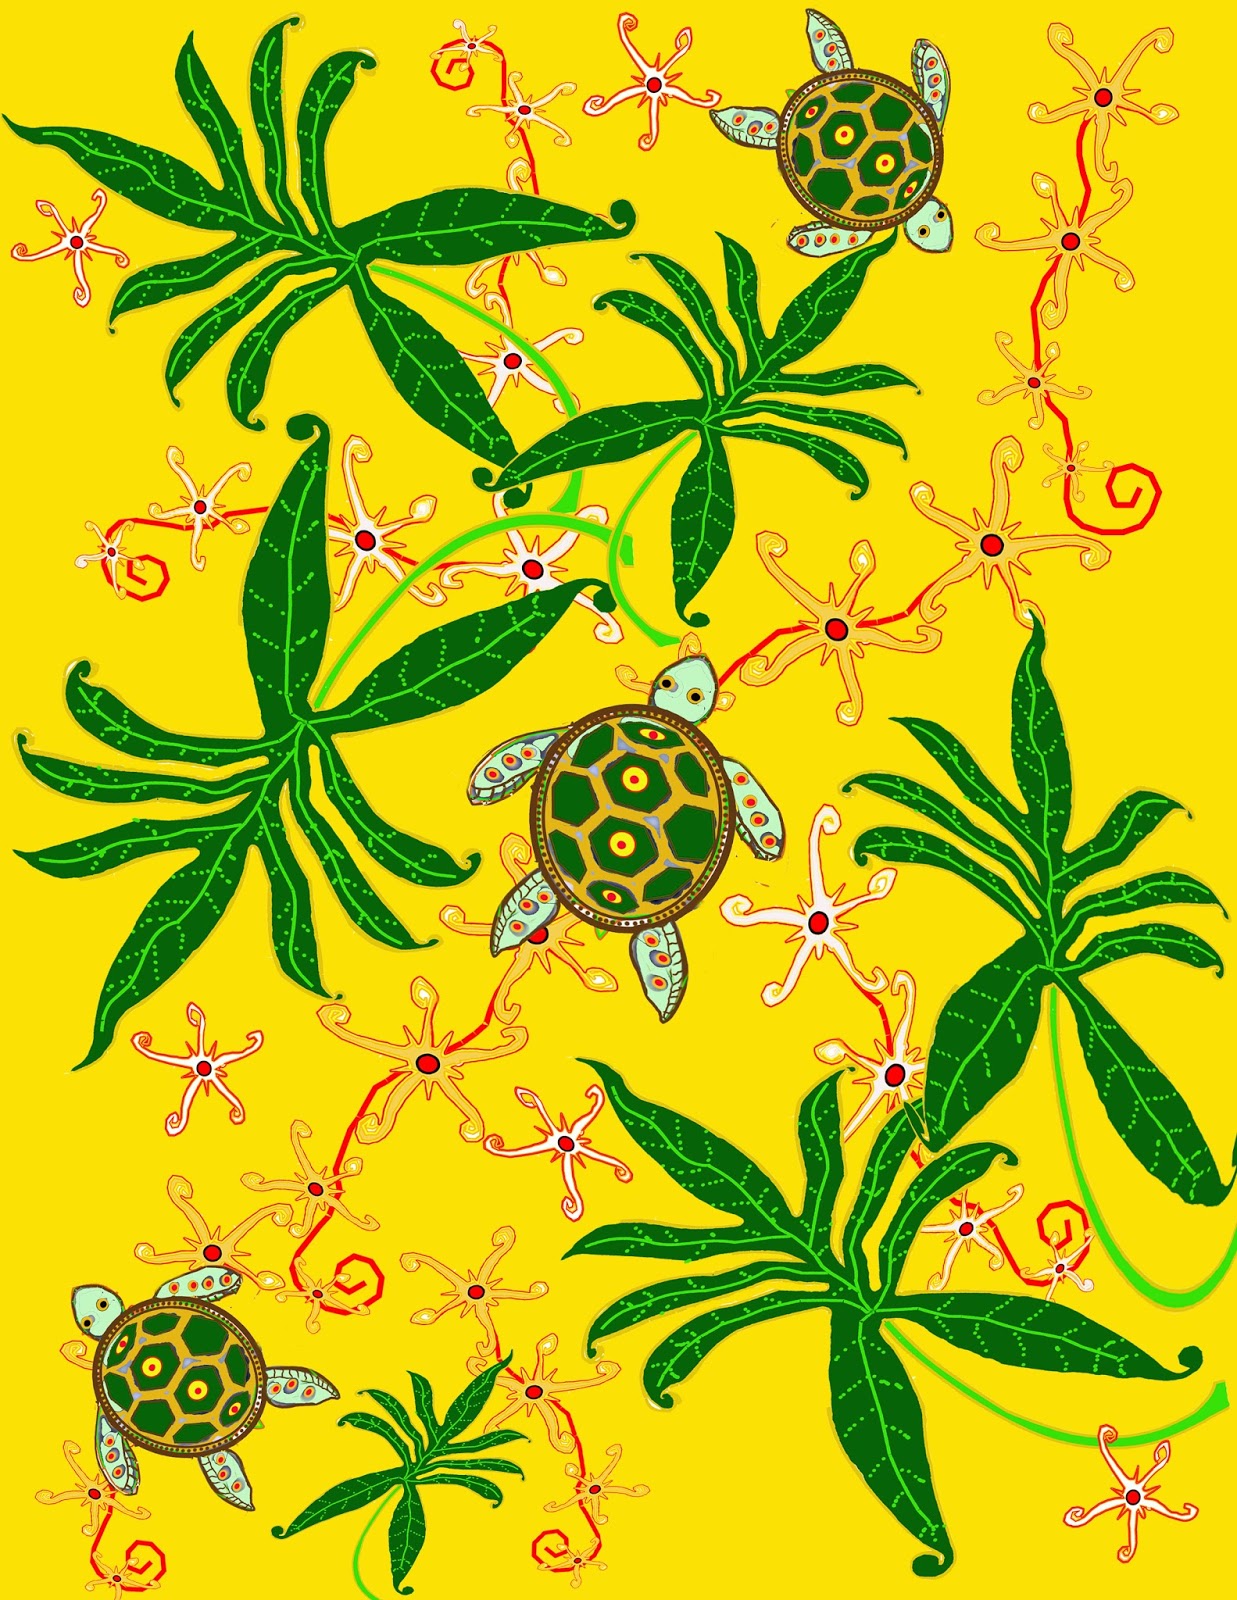 Lams Gallery Lukisan Penangkaran Motif Batik Rutun Bunga Anggrek